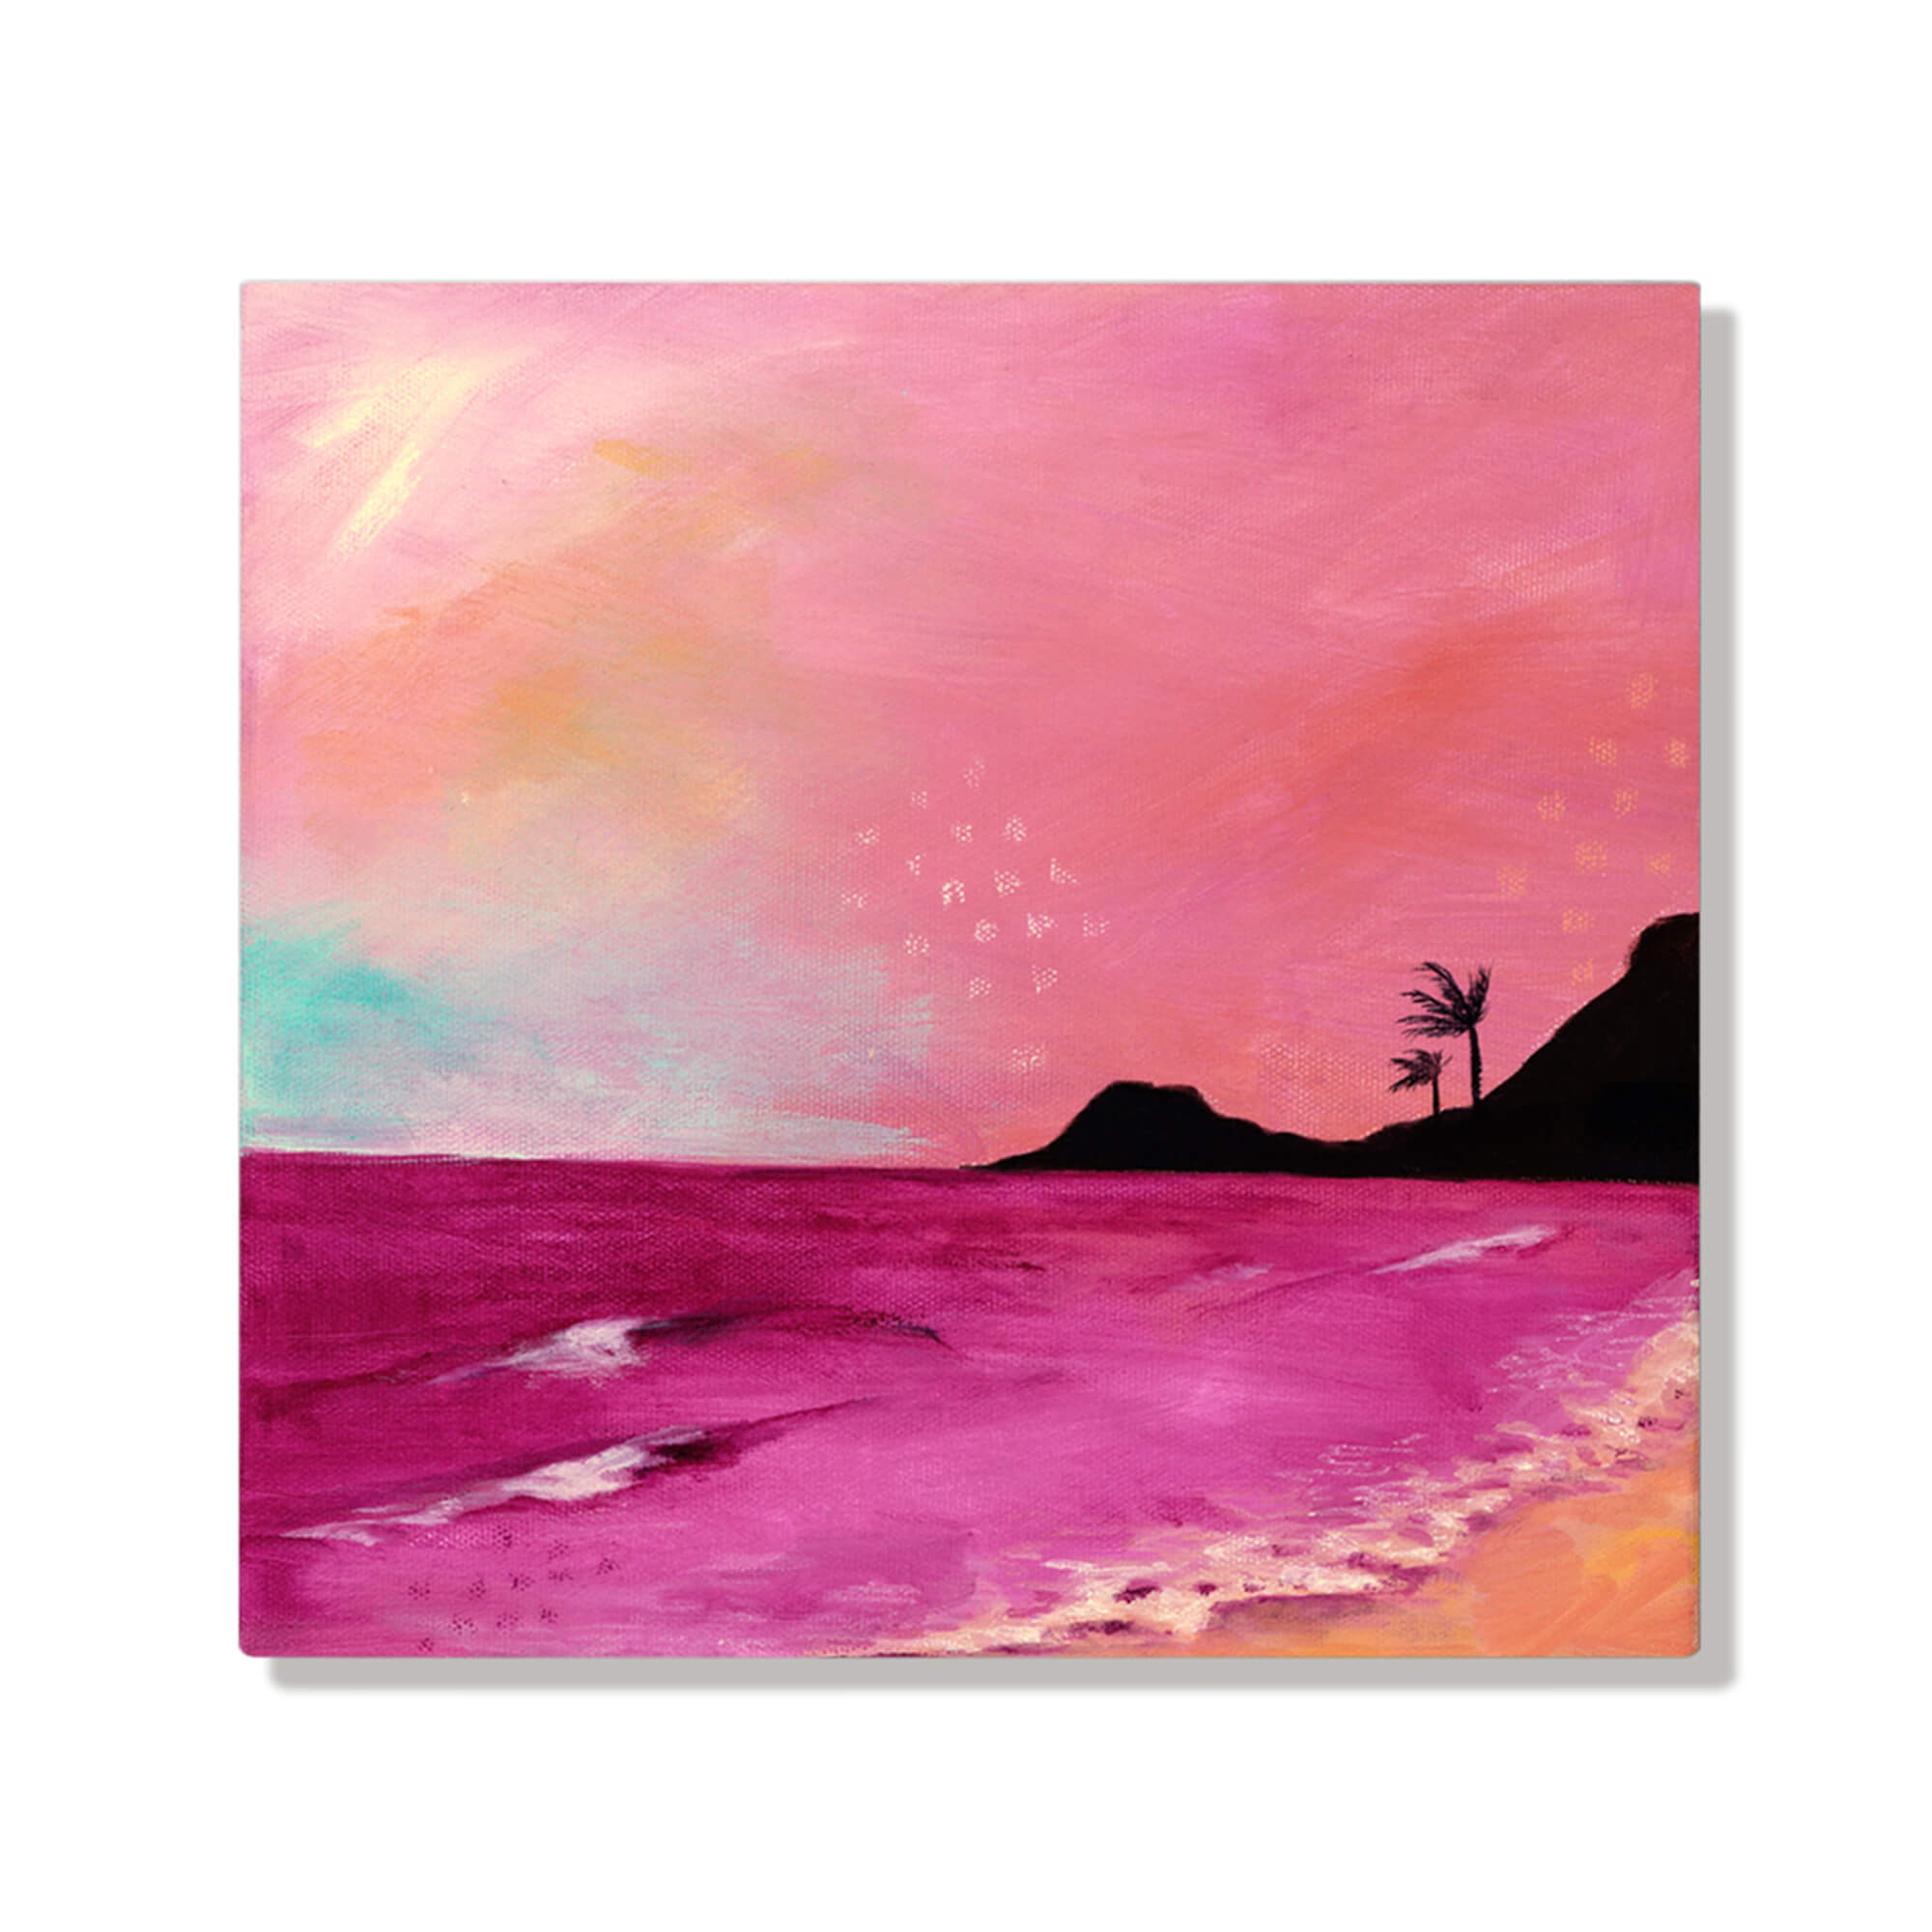 A pink hued seascape by Hawaii artist Lindsay Wilkins